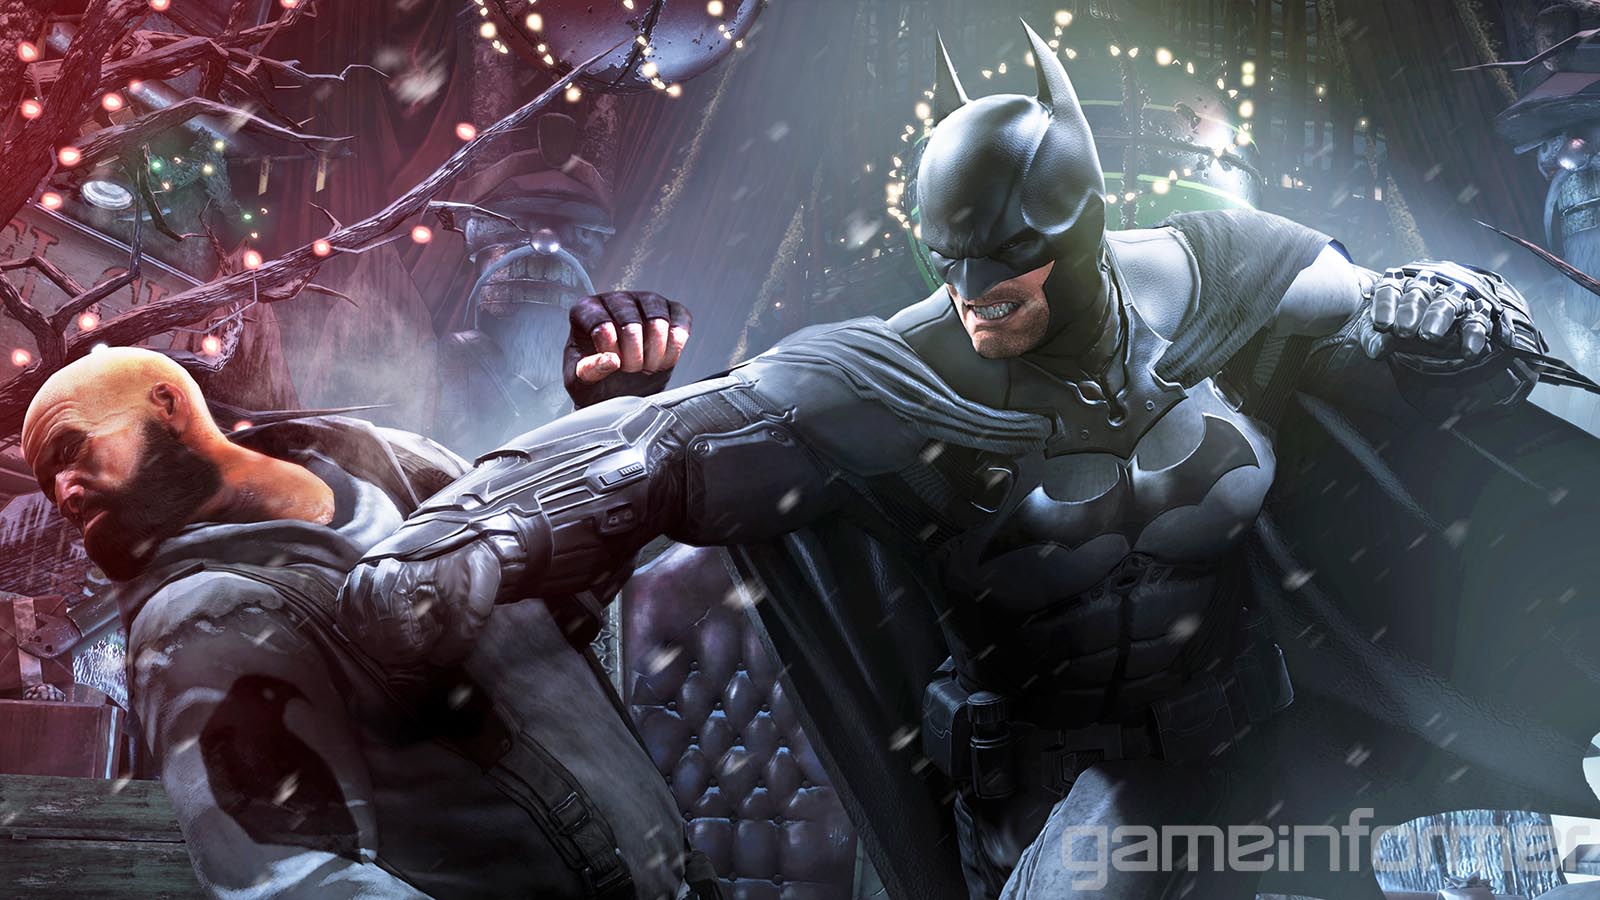 http://supernovo.net/wp-content/uploads/2013/04/Batman-Arkham-Origins-multiplayer.jpg